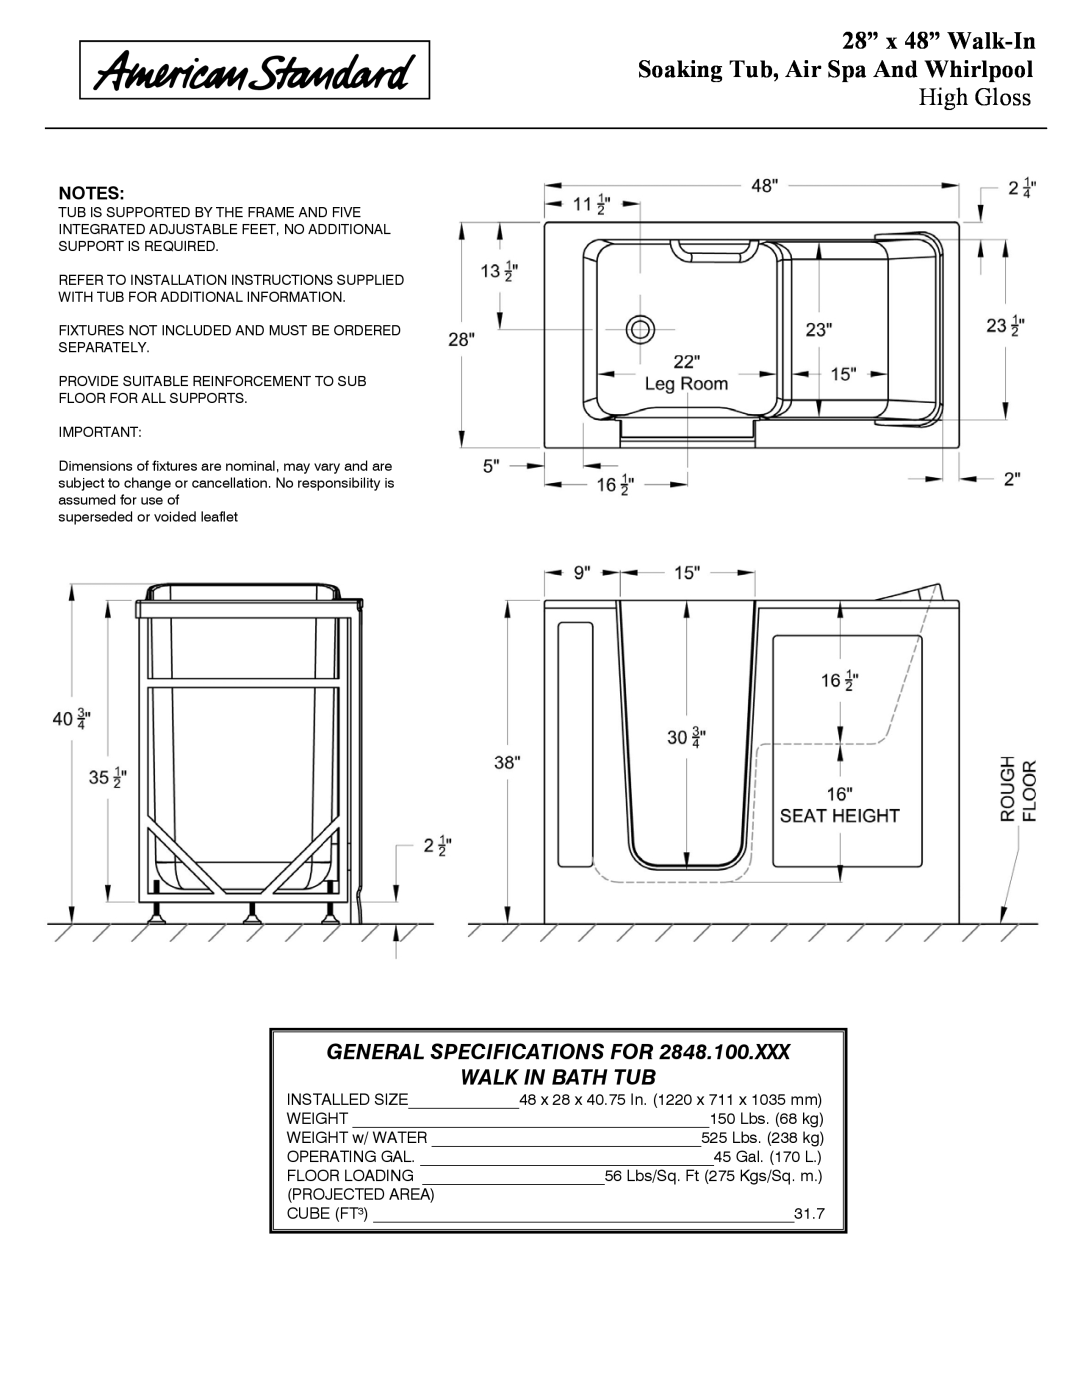 American Standard 2848.100.SXX dimensions 28” x 48” Walk-In, Soaking Tub, Air Spa And Whirlpool, High Gloss 